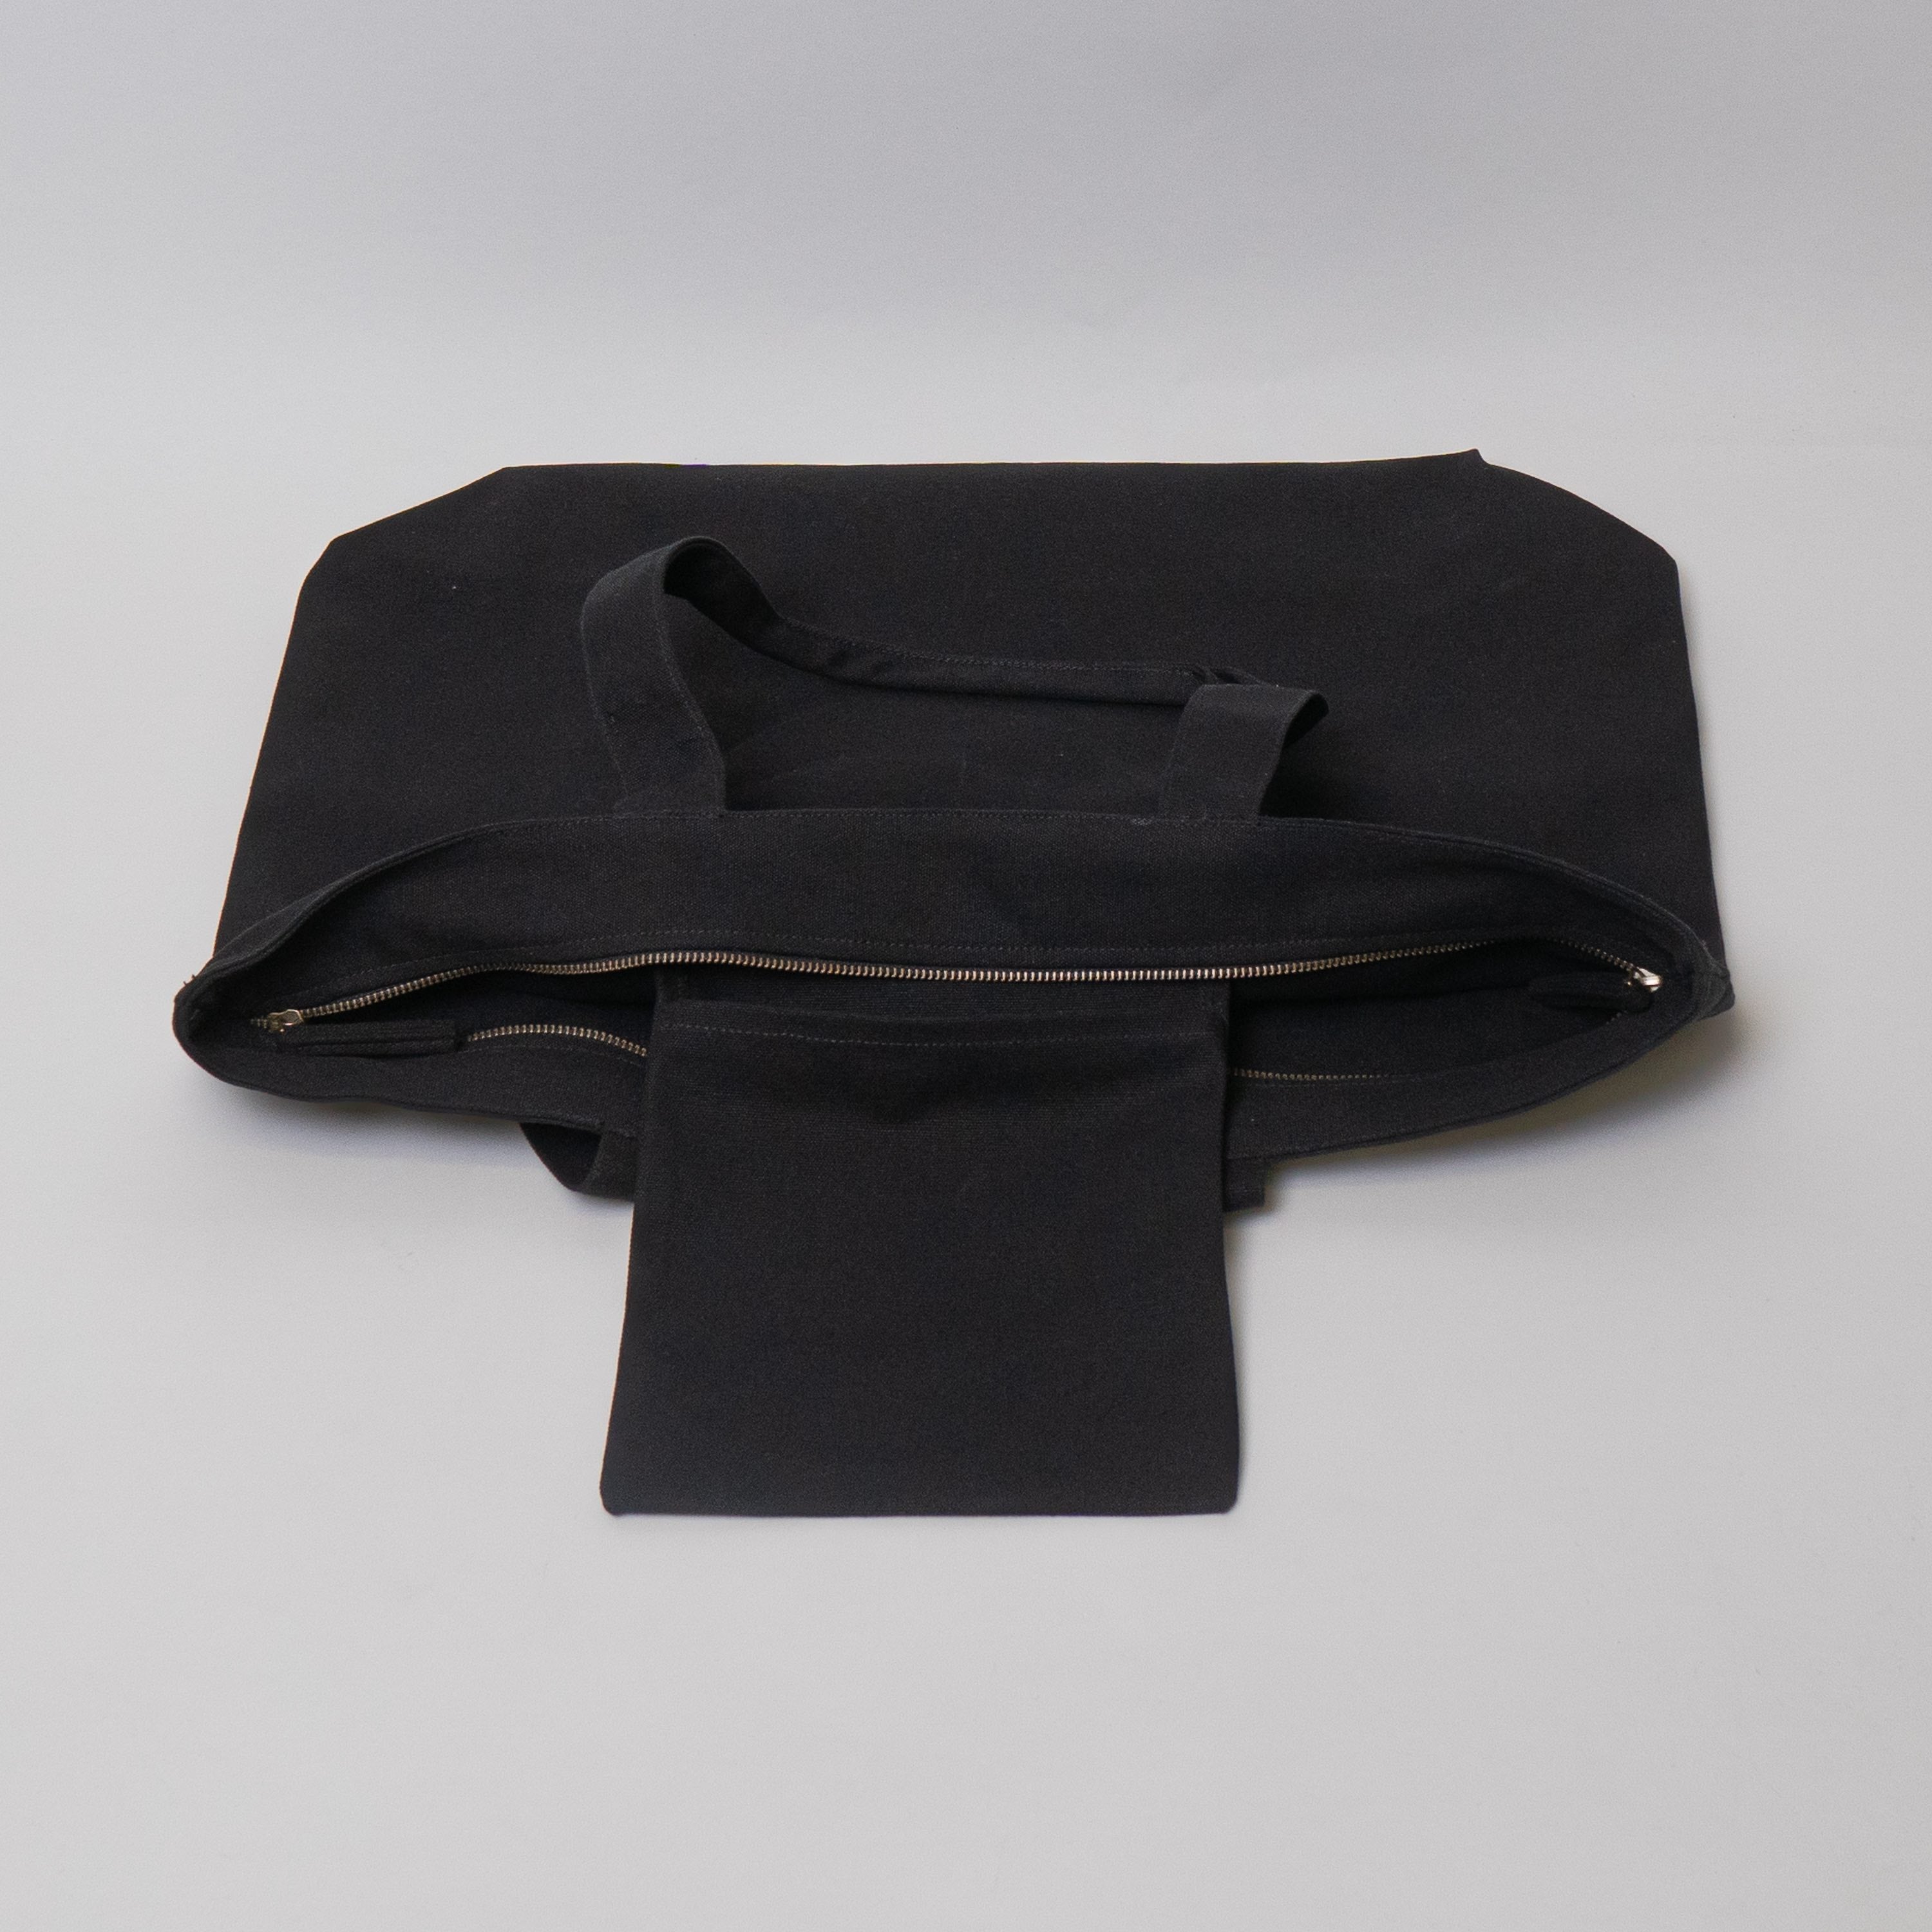 black tote bag with zipper